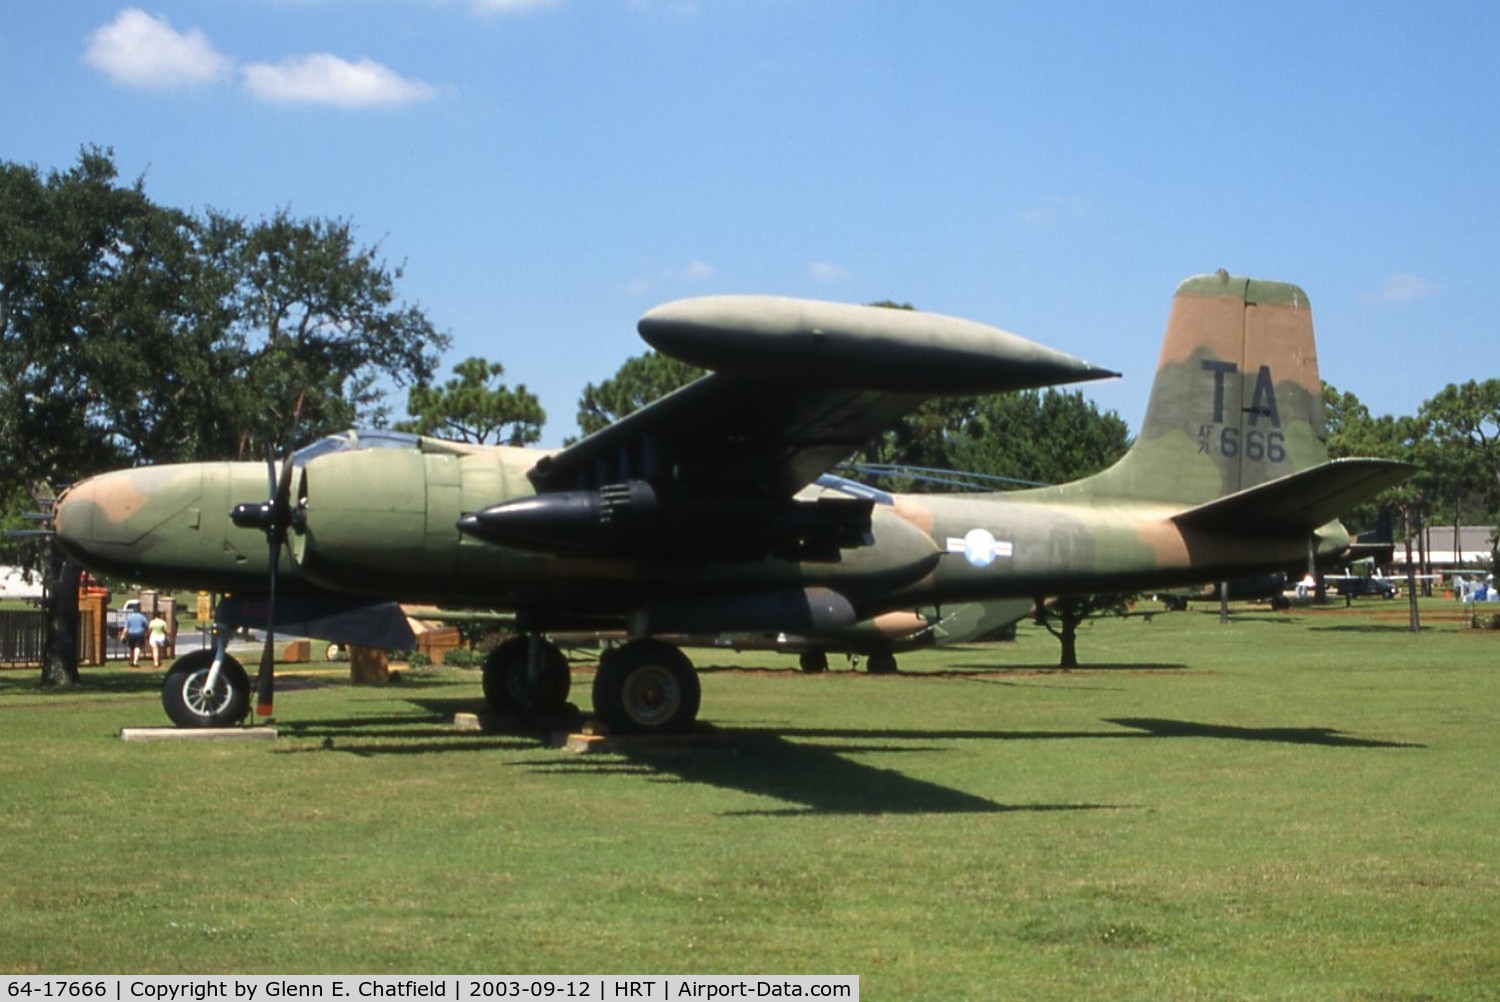 64-17666, 1964 Douglas-On Mark B-26K Counter Invader C/N 28762 (was 44-35483), At Hurlburt Field, Florida